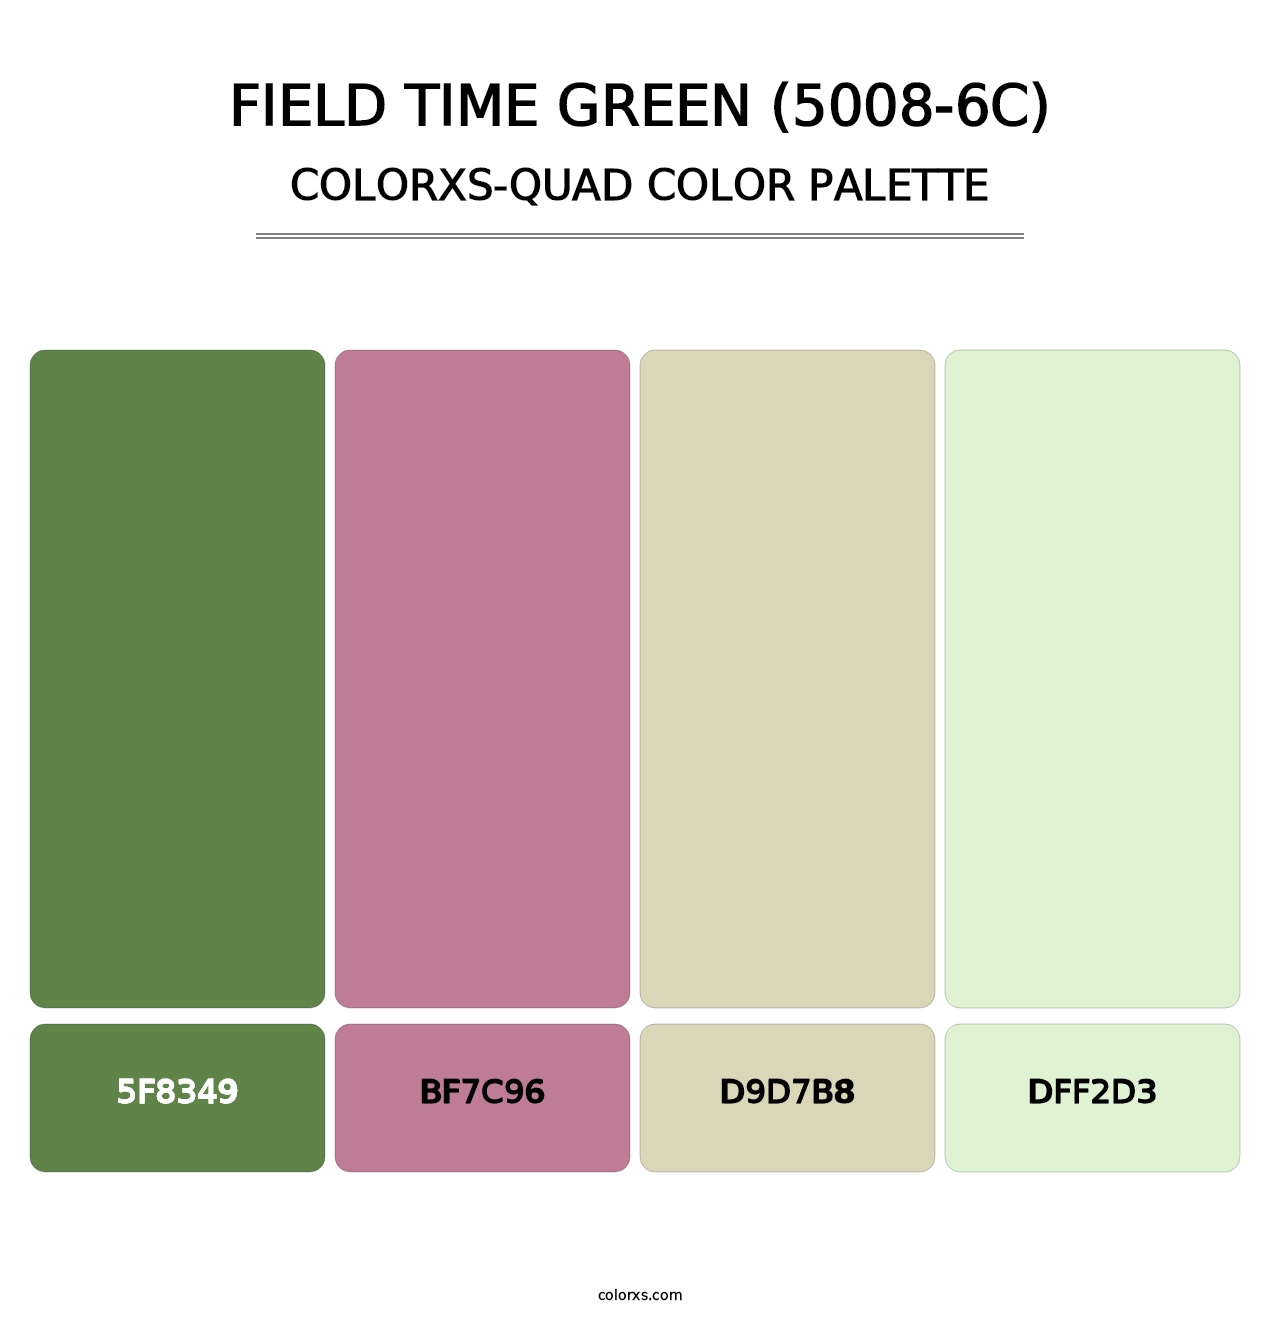 Field Time Green (5008-6C) - Colorxs Quad Palette